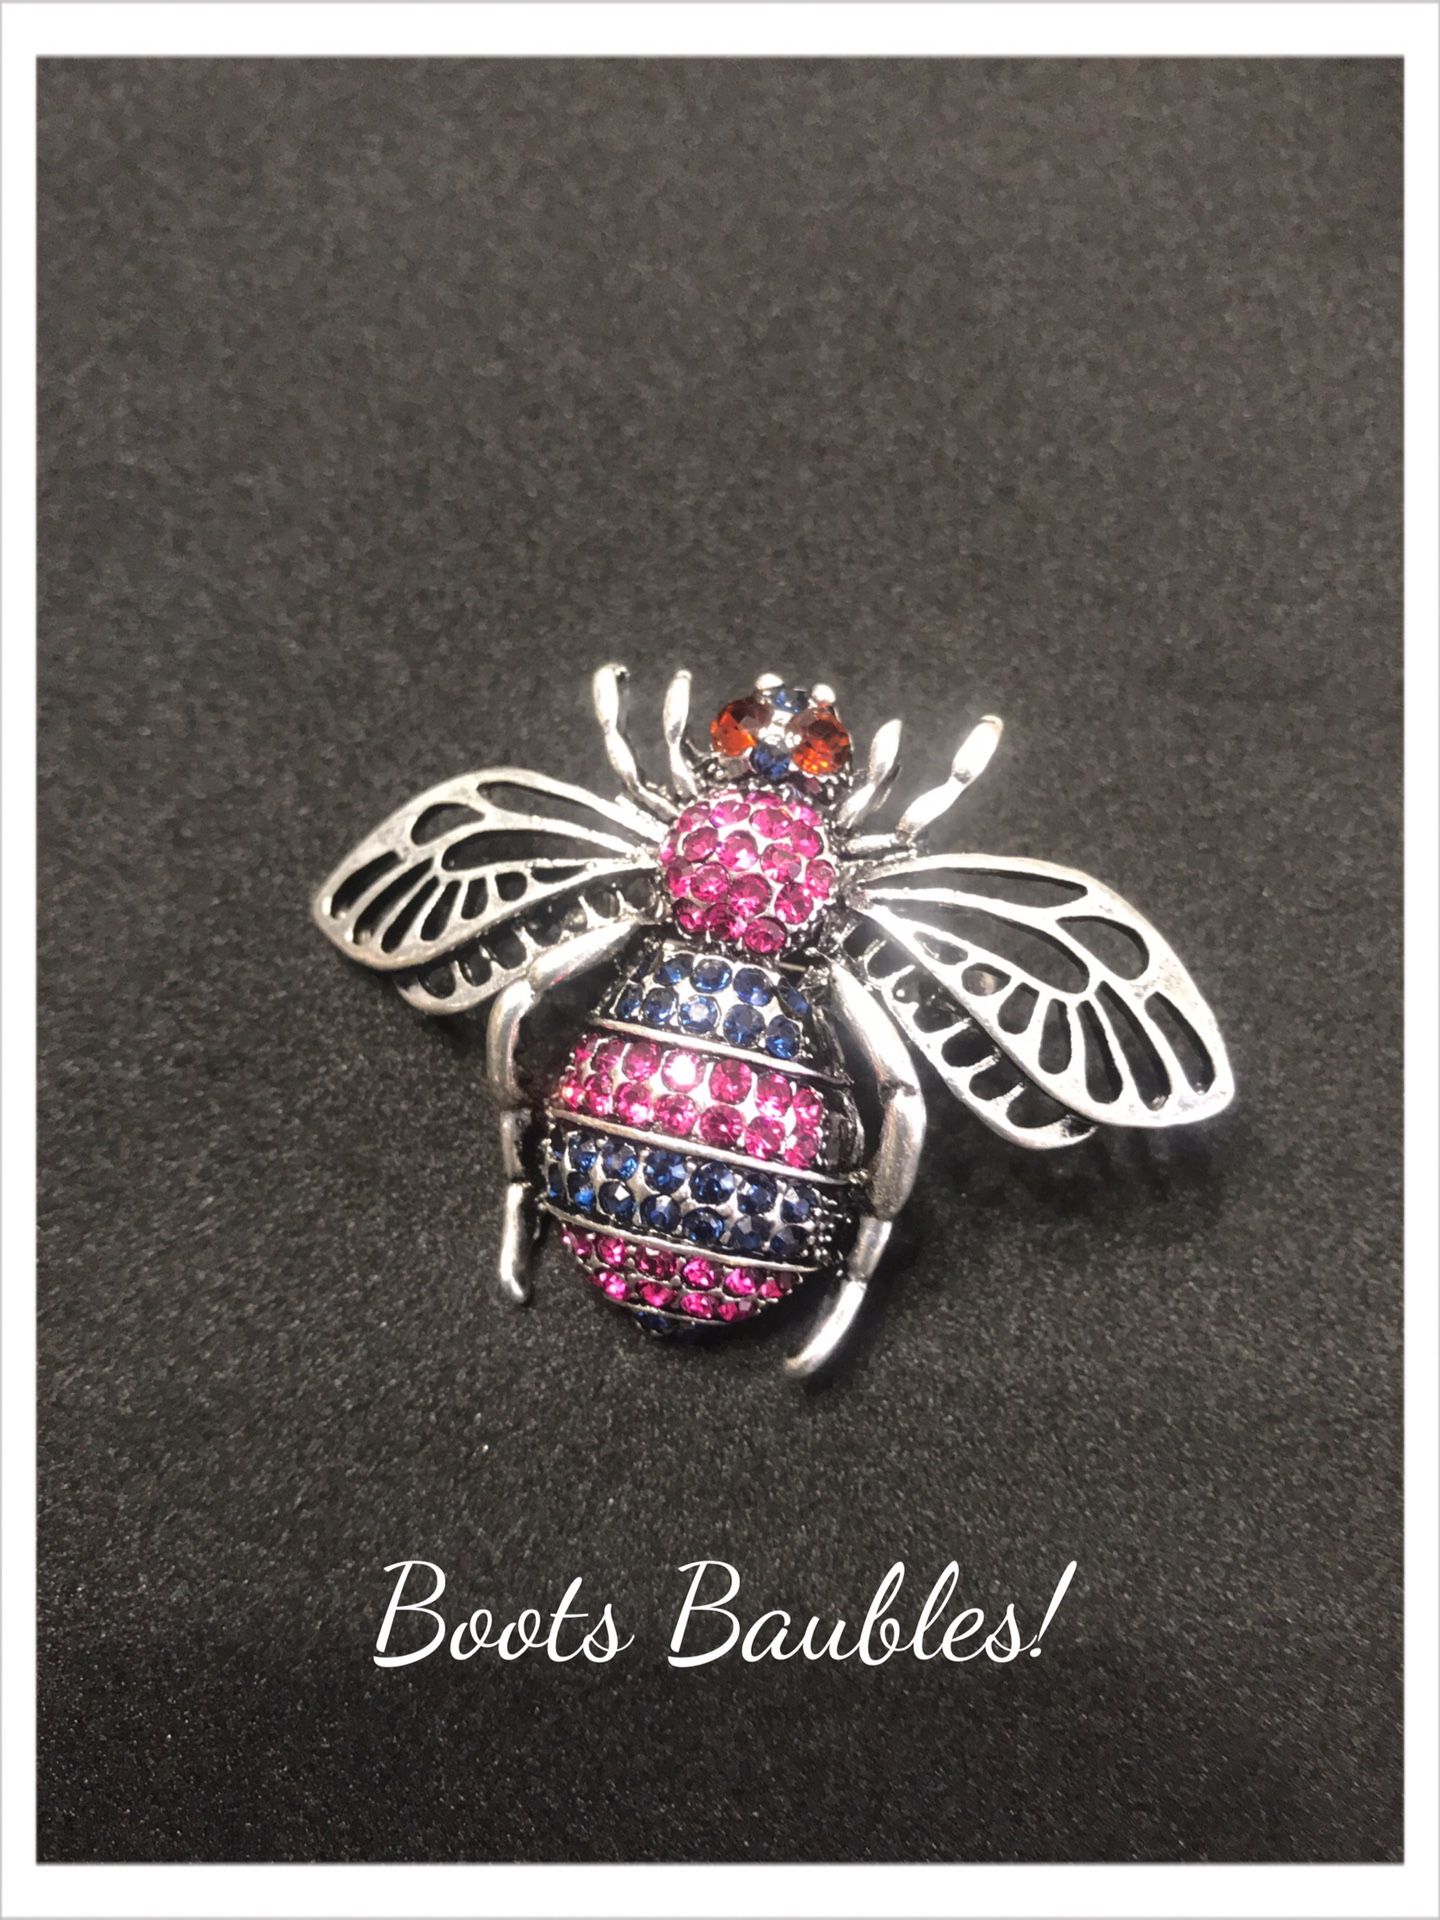 Bumble bee brooch